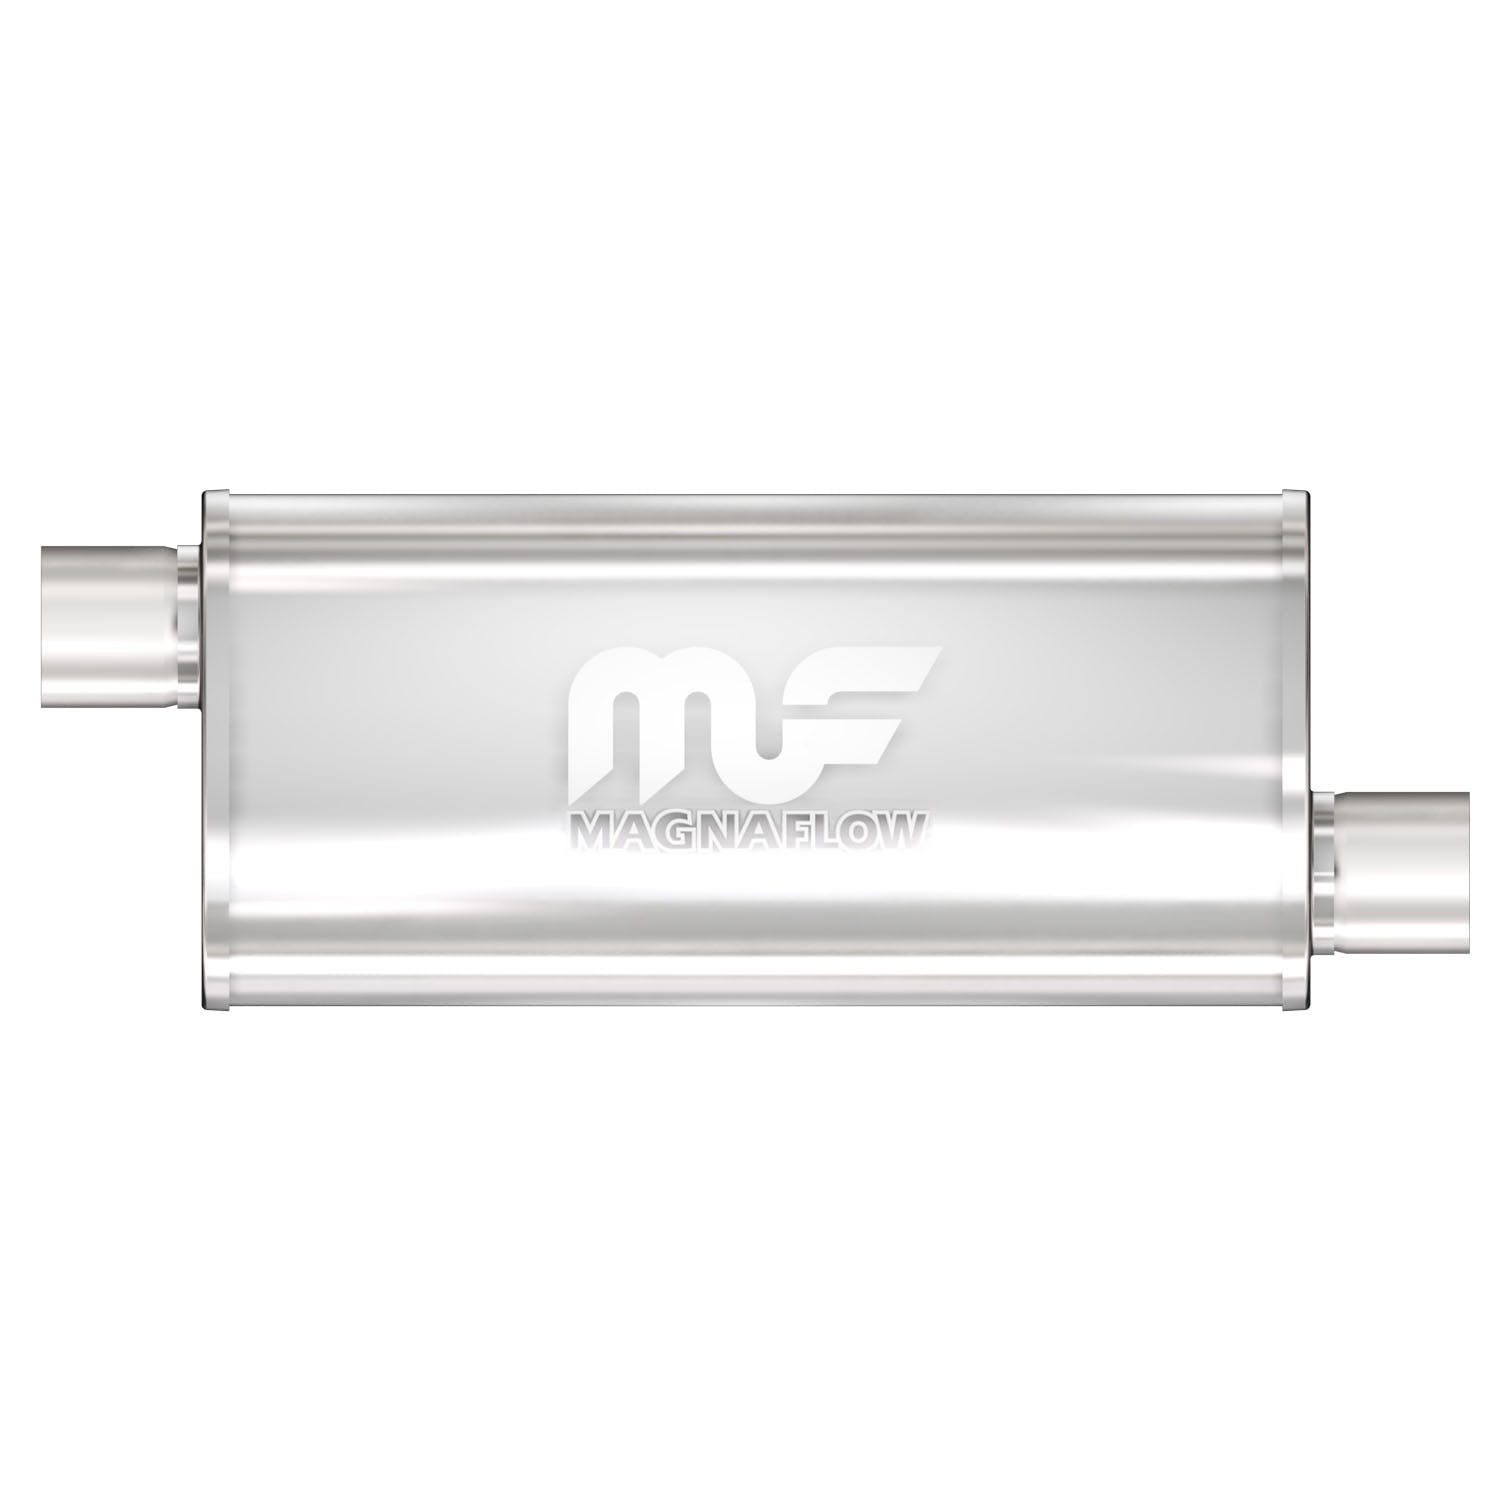 MagnaFlow Exhaust Products 14260 Universal Muffler